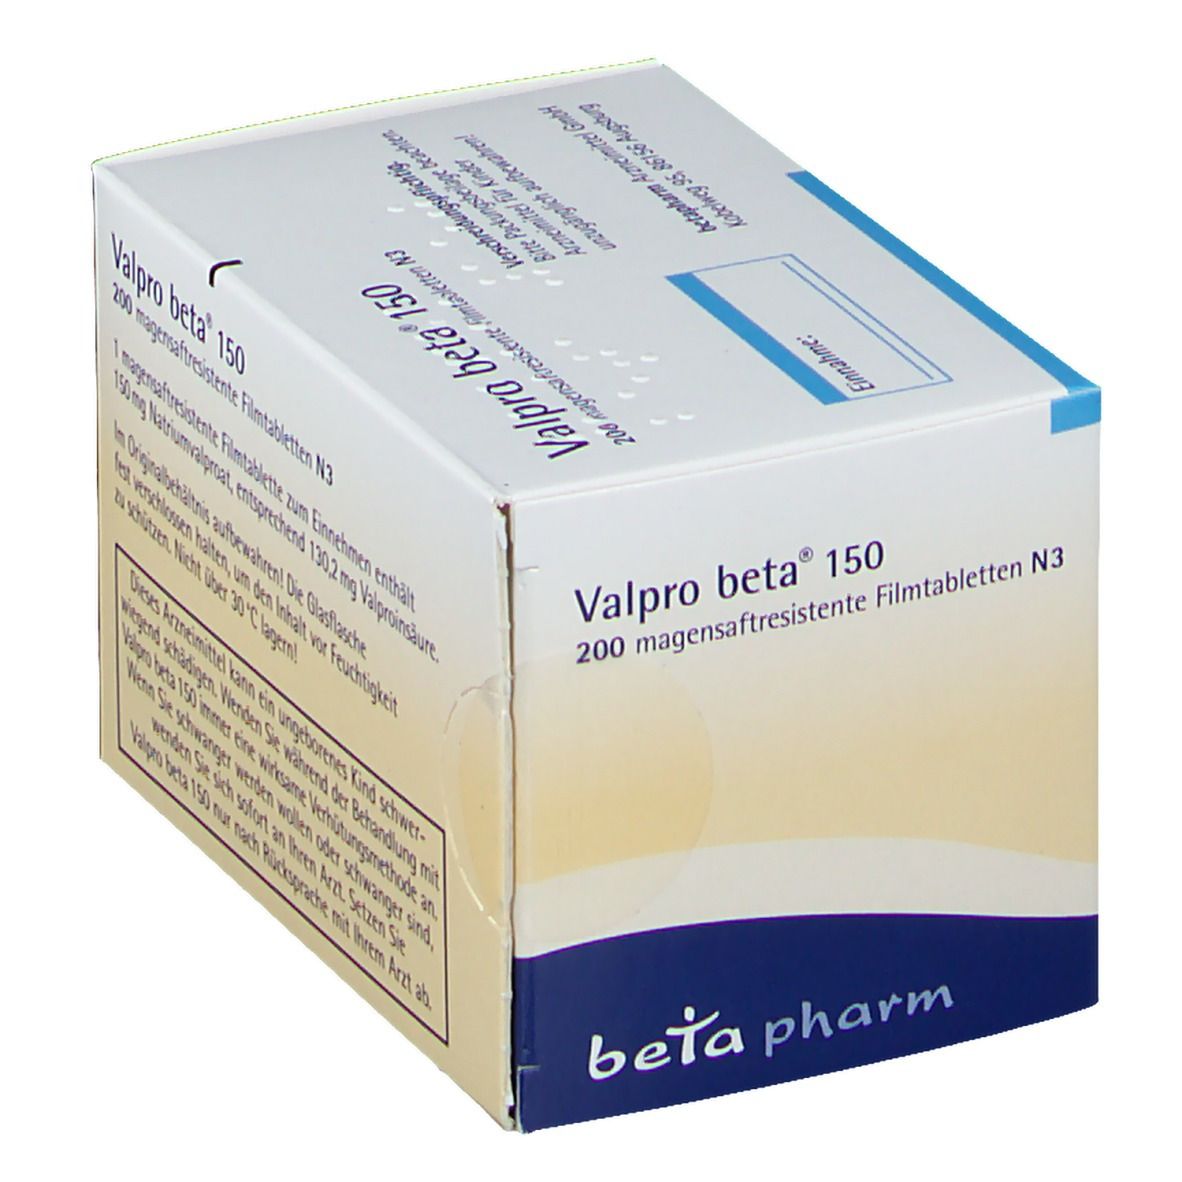 Valpro beta® 150